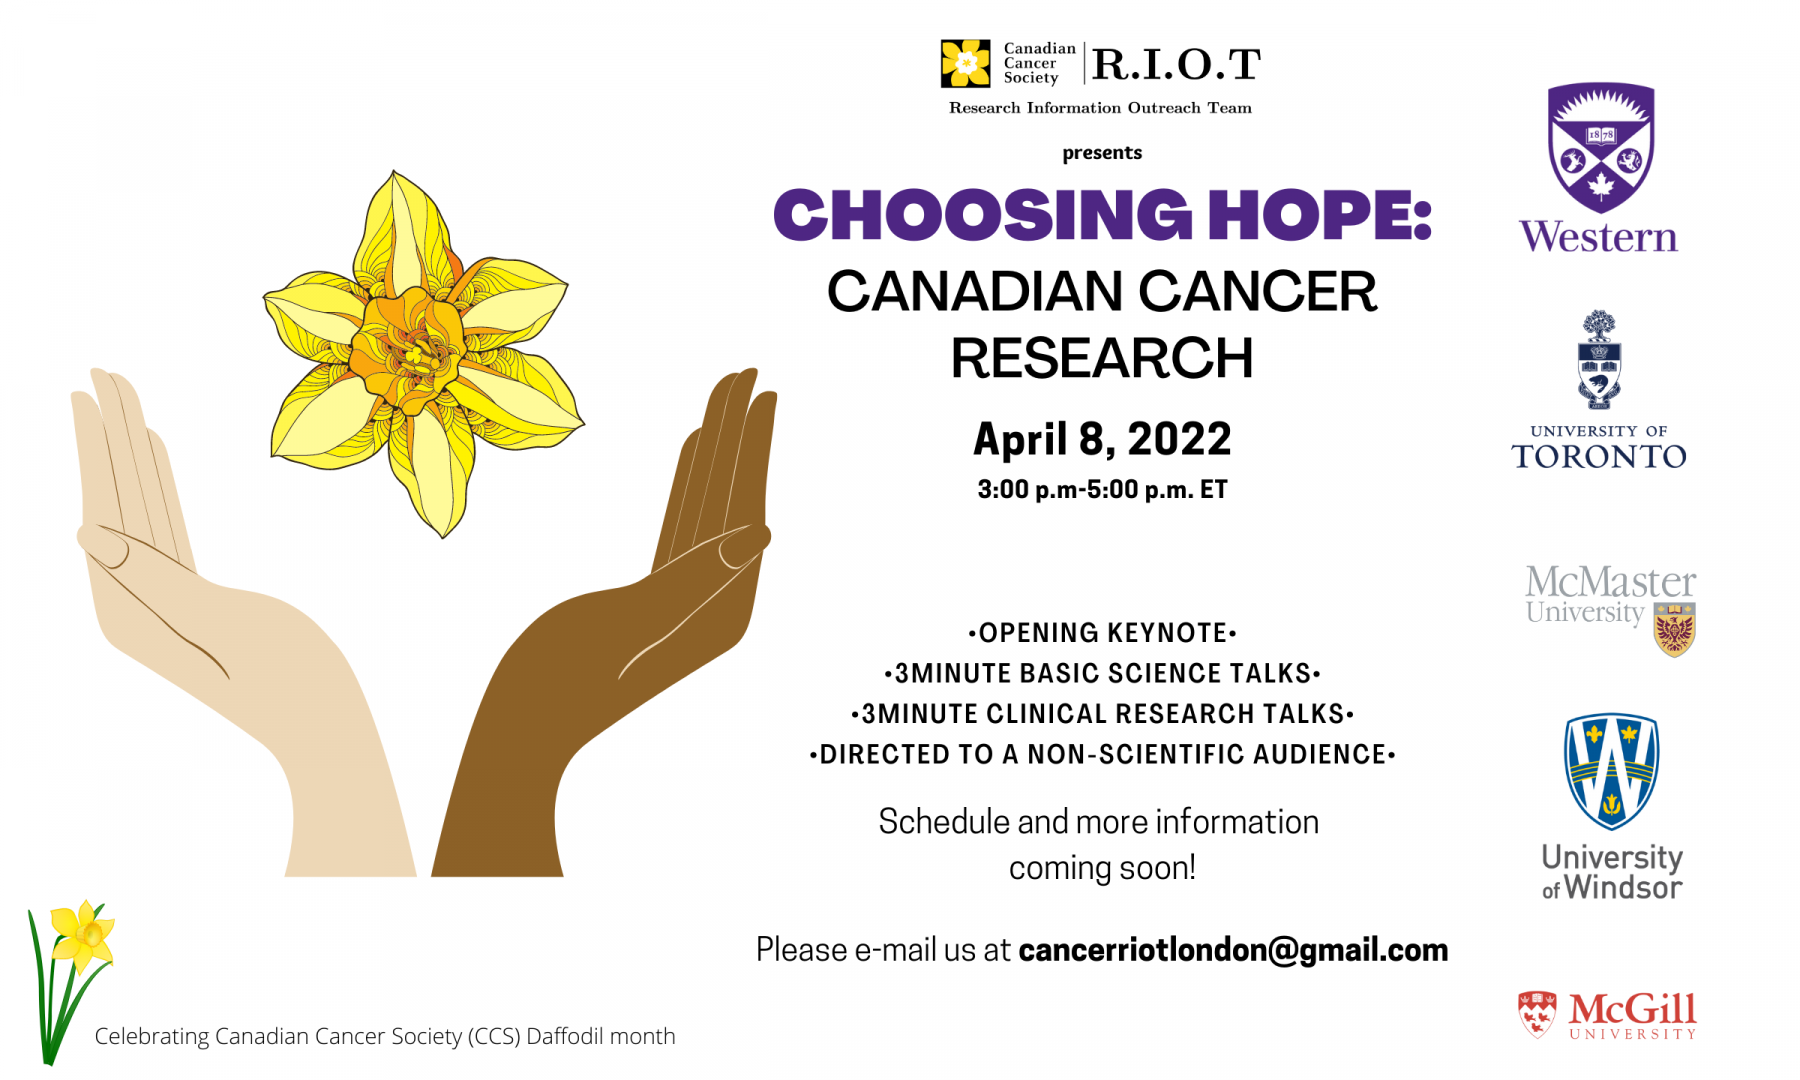 Choosing Hope: Canadian Cancer Research (CHCCR) Symposium